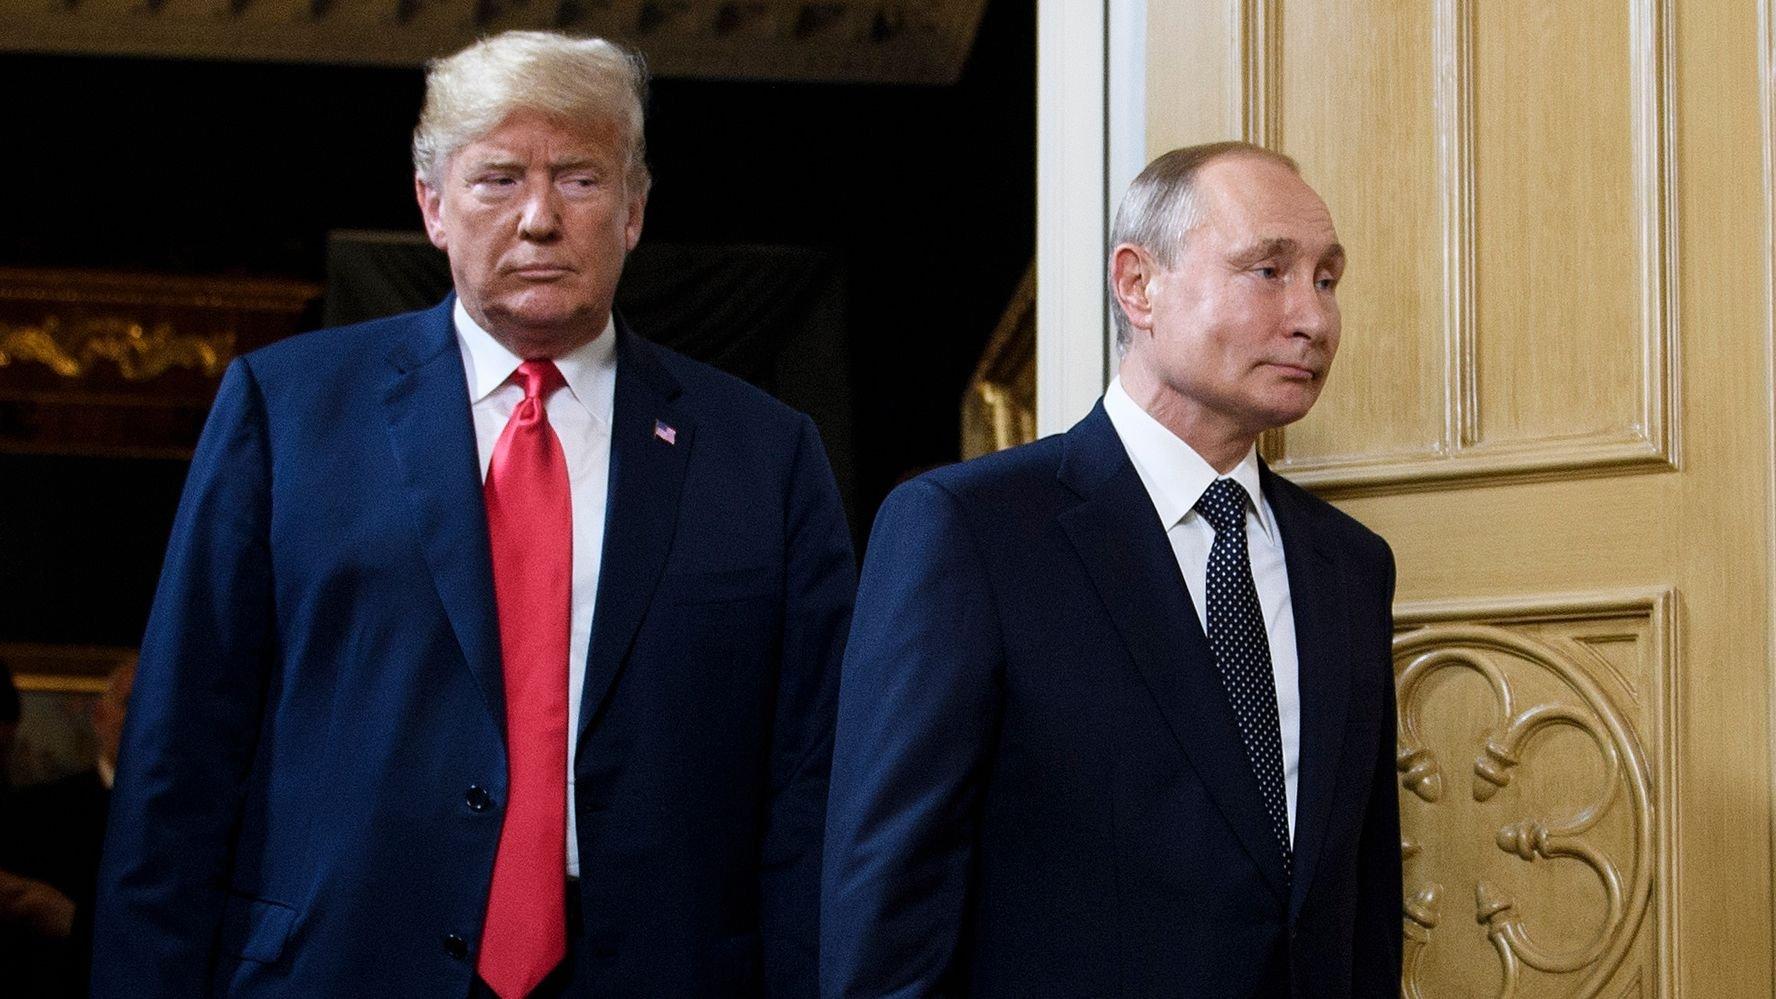 Former President Donald Trump next to Russian President Vladimir Putin